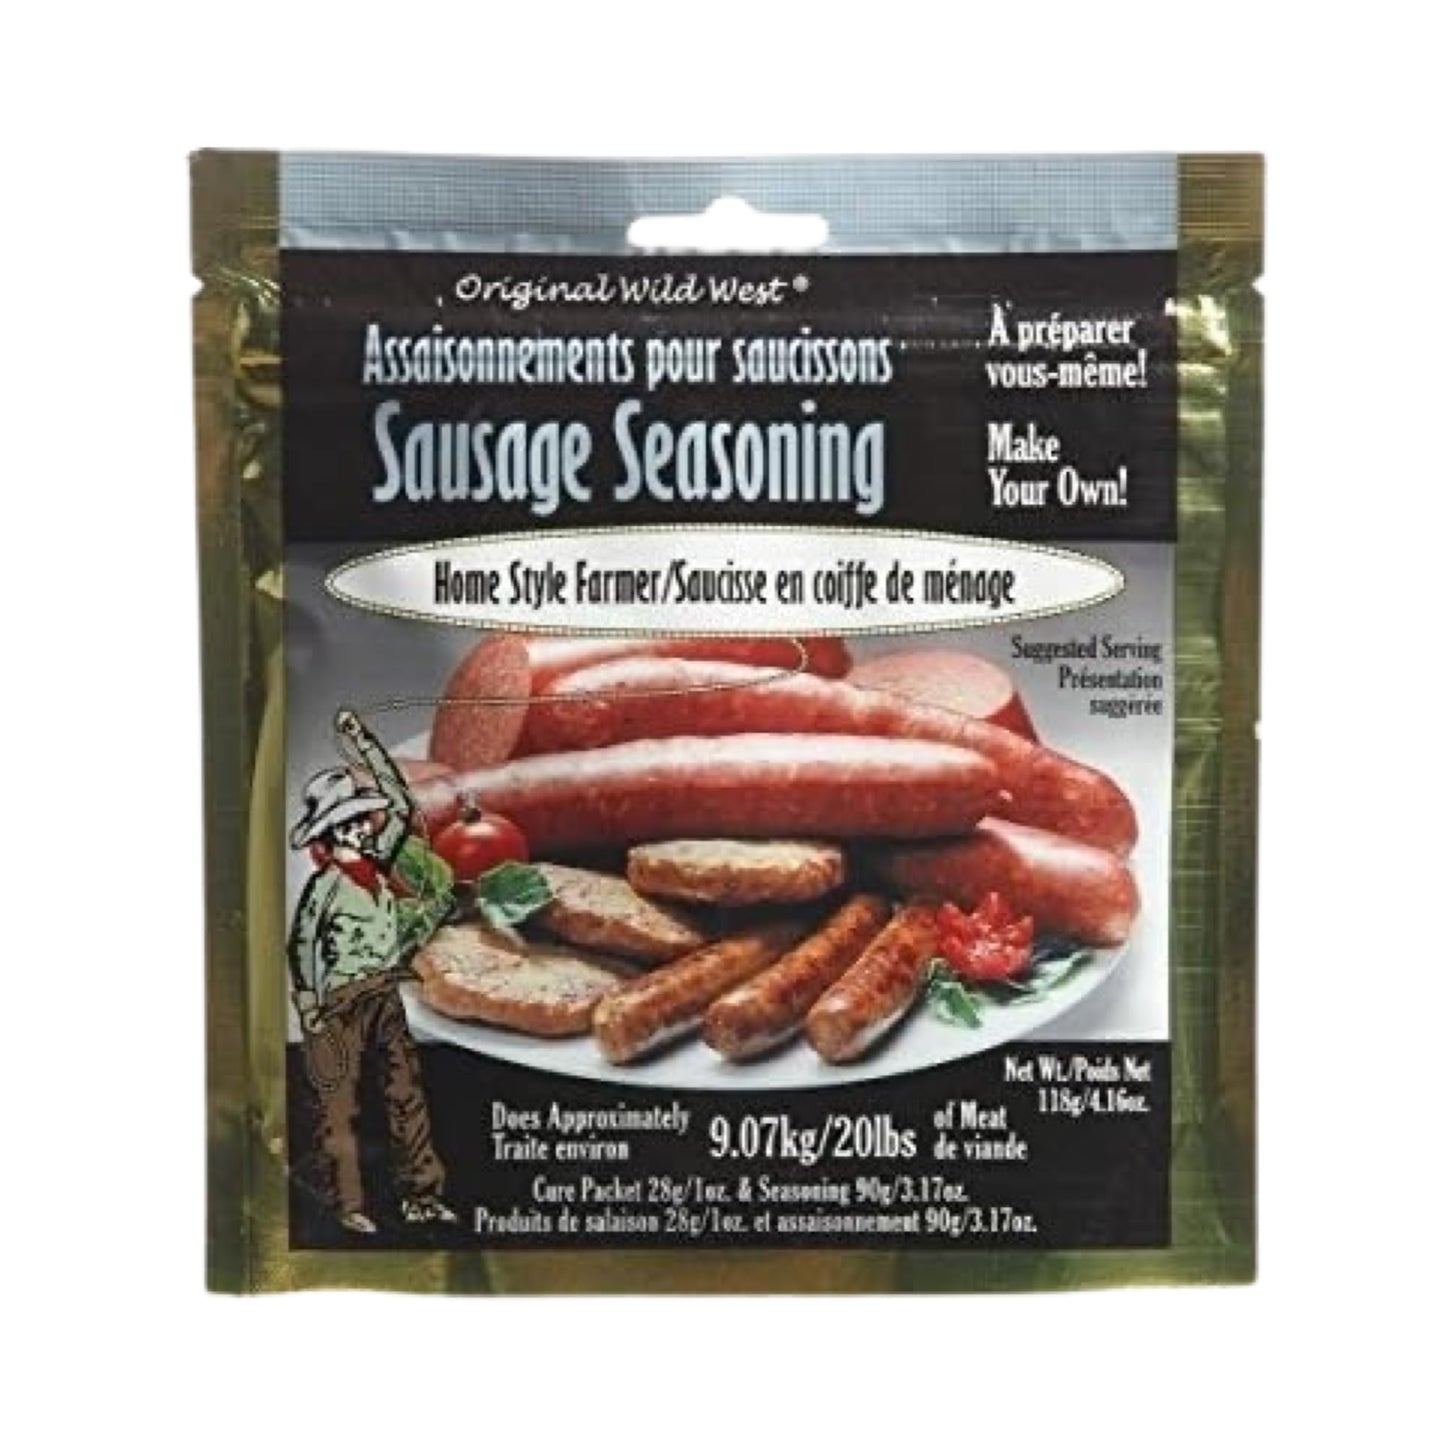 Original Wild West - Sausage Seasoning Multi Flavour Pack